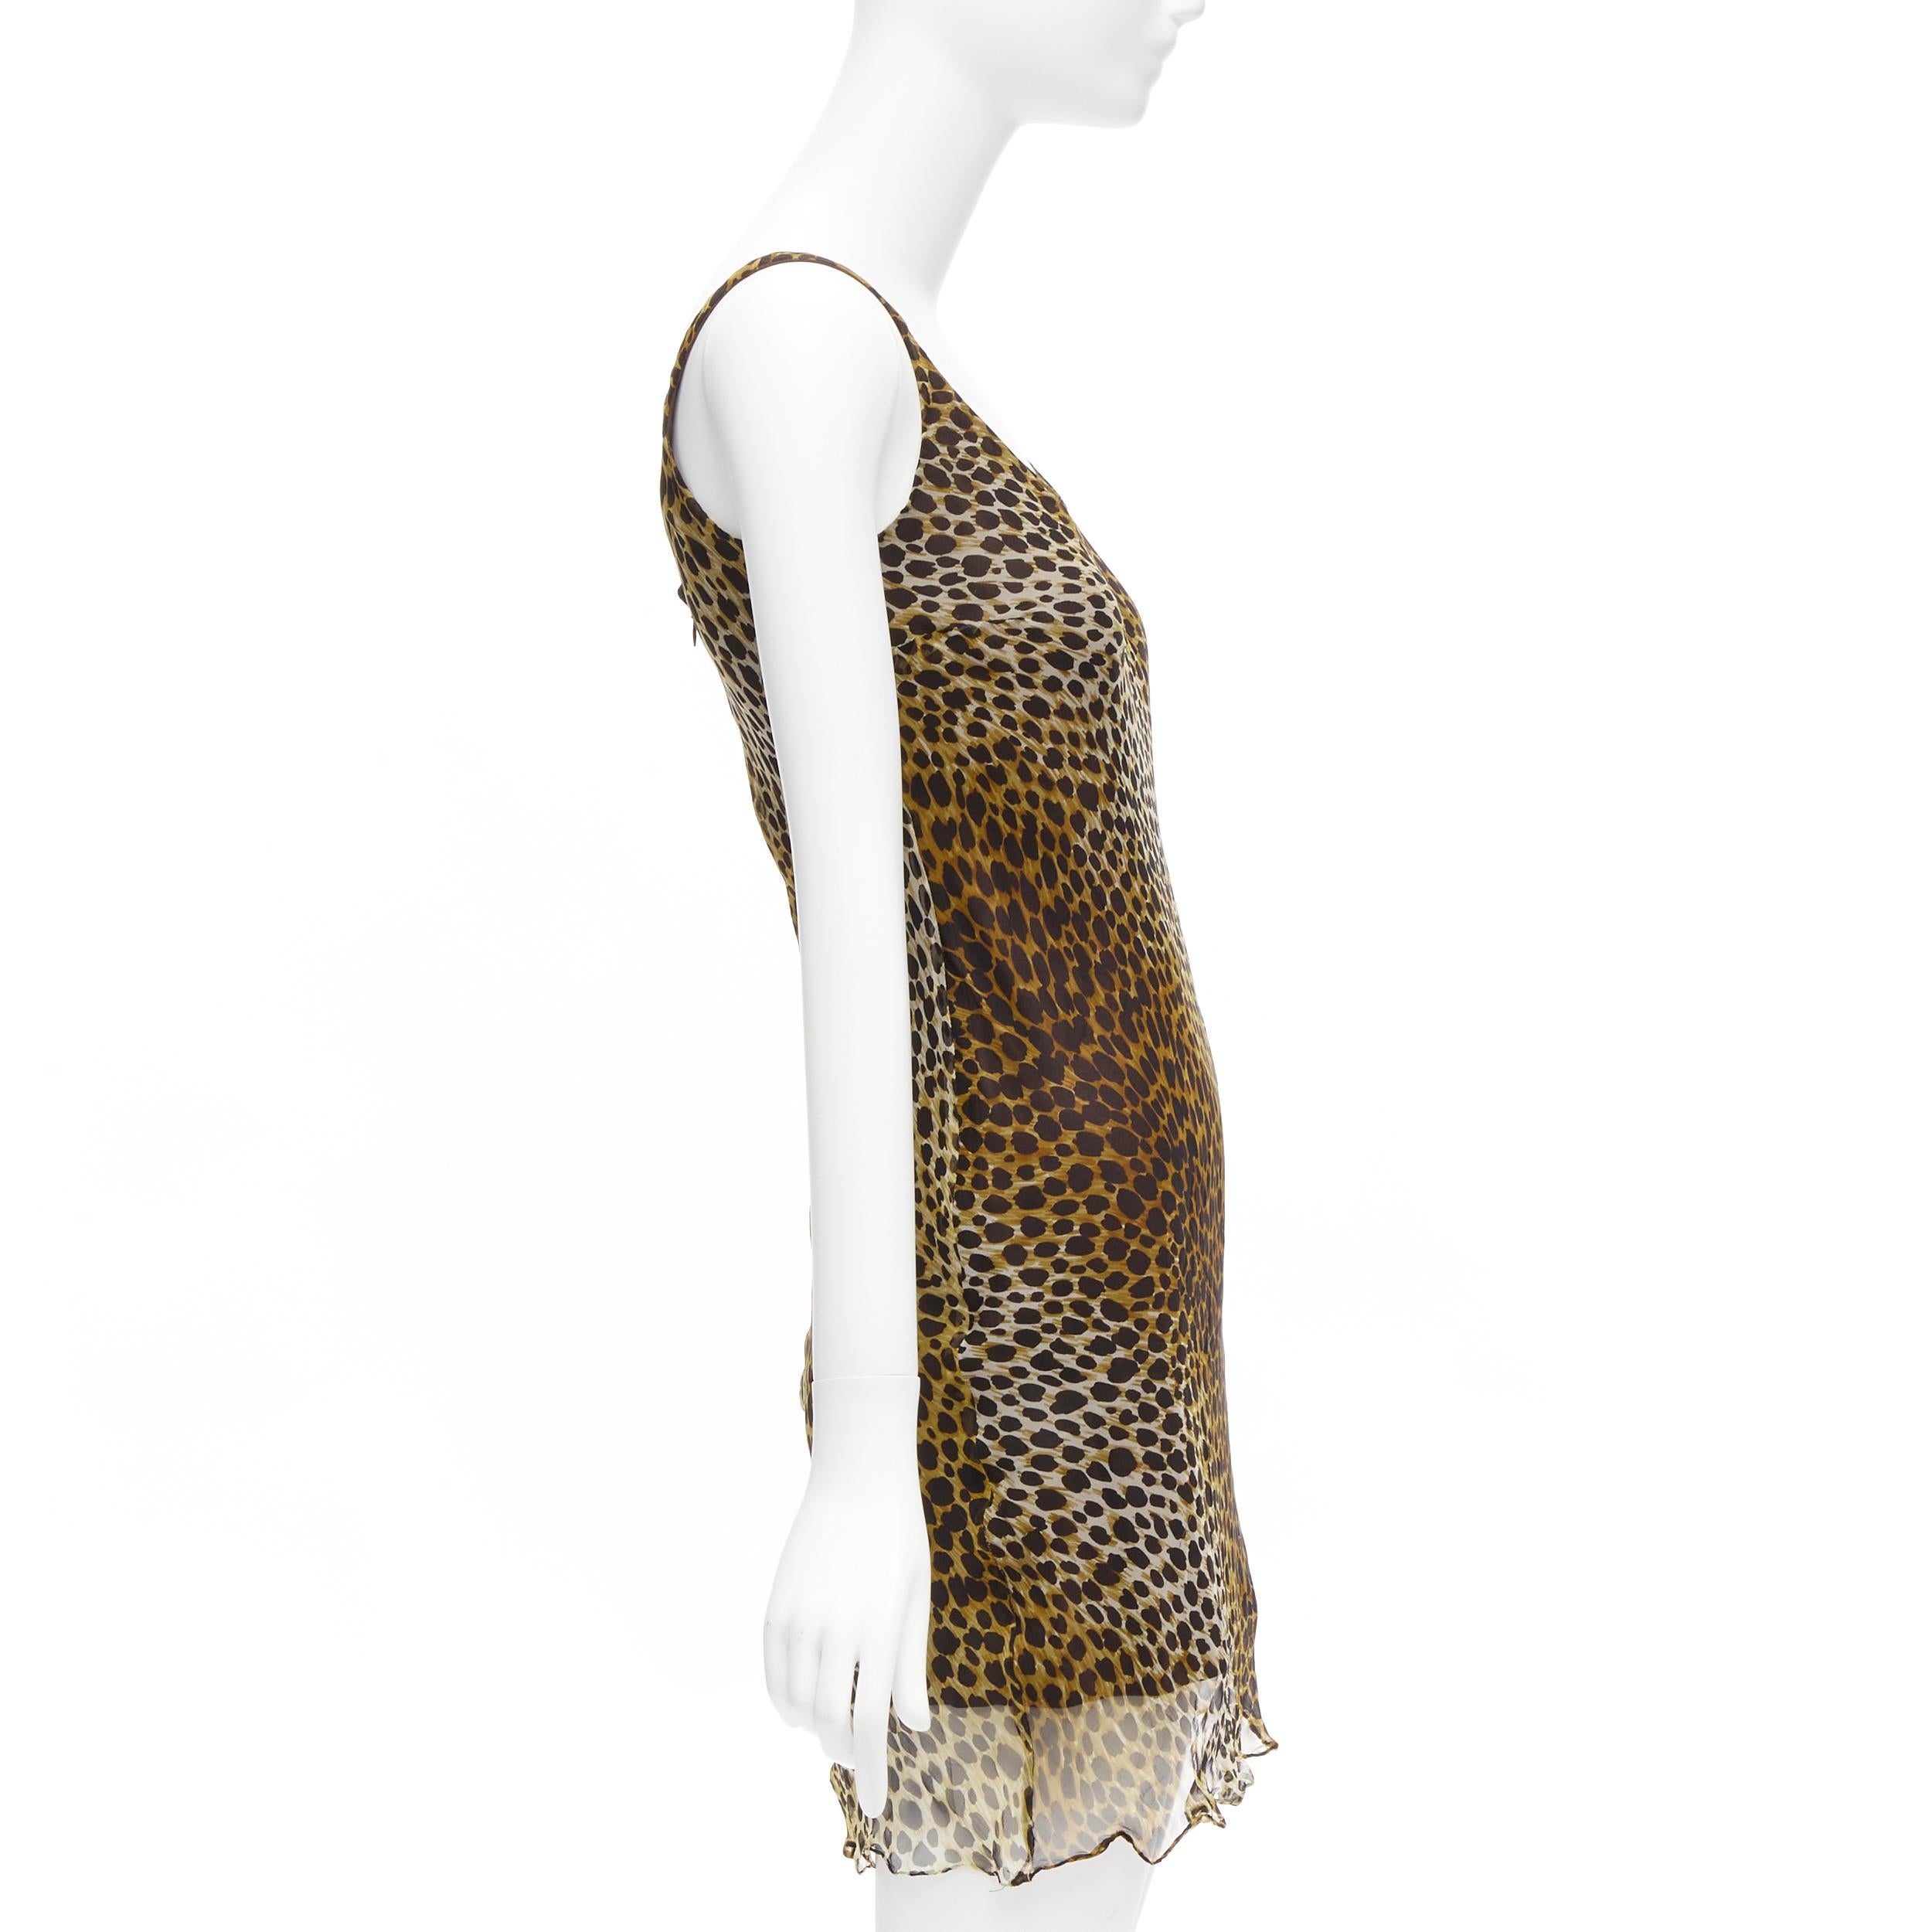 sheer leopard print dress